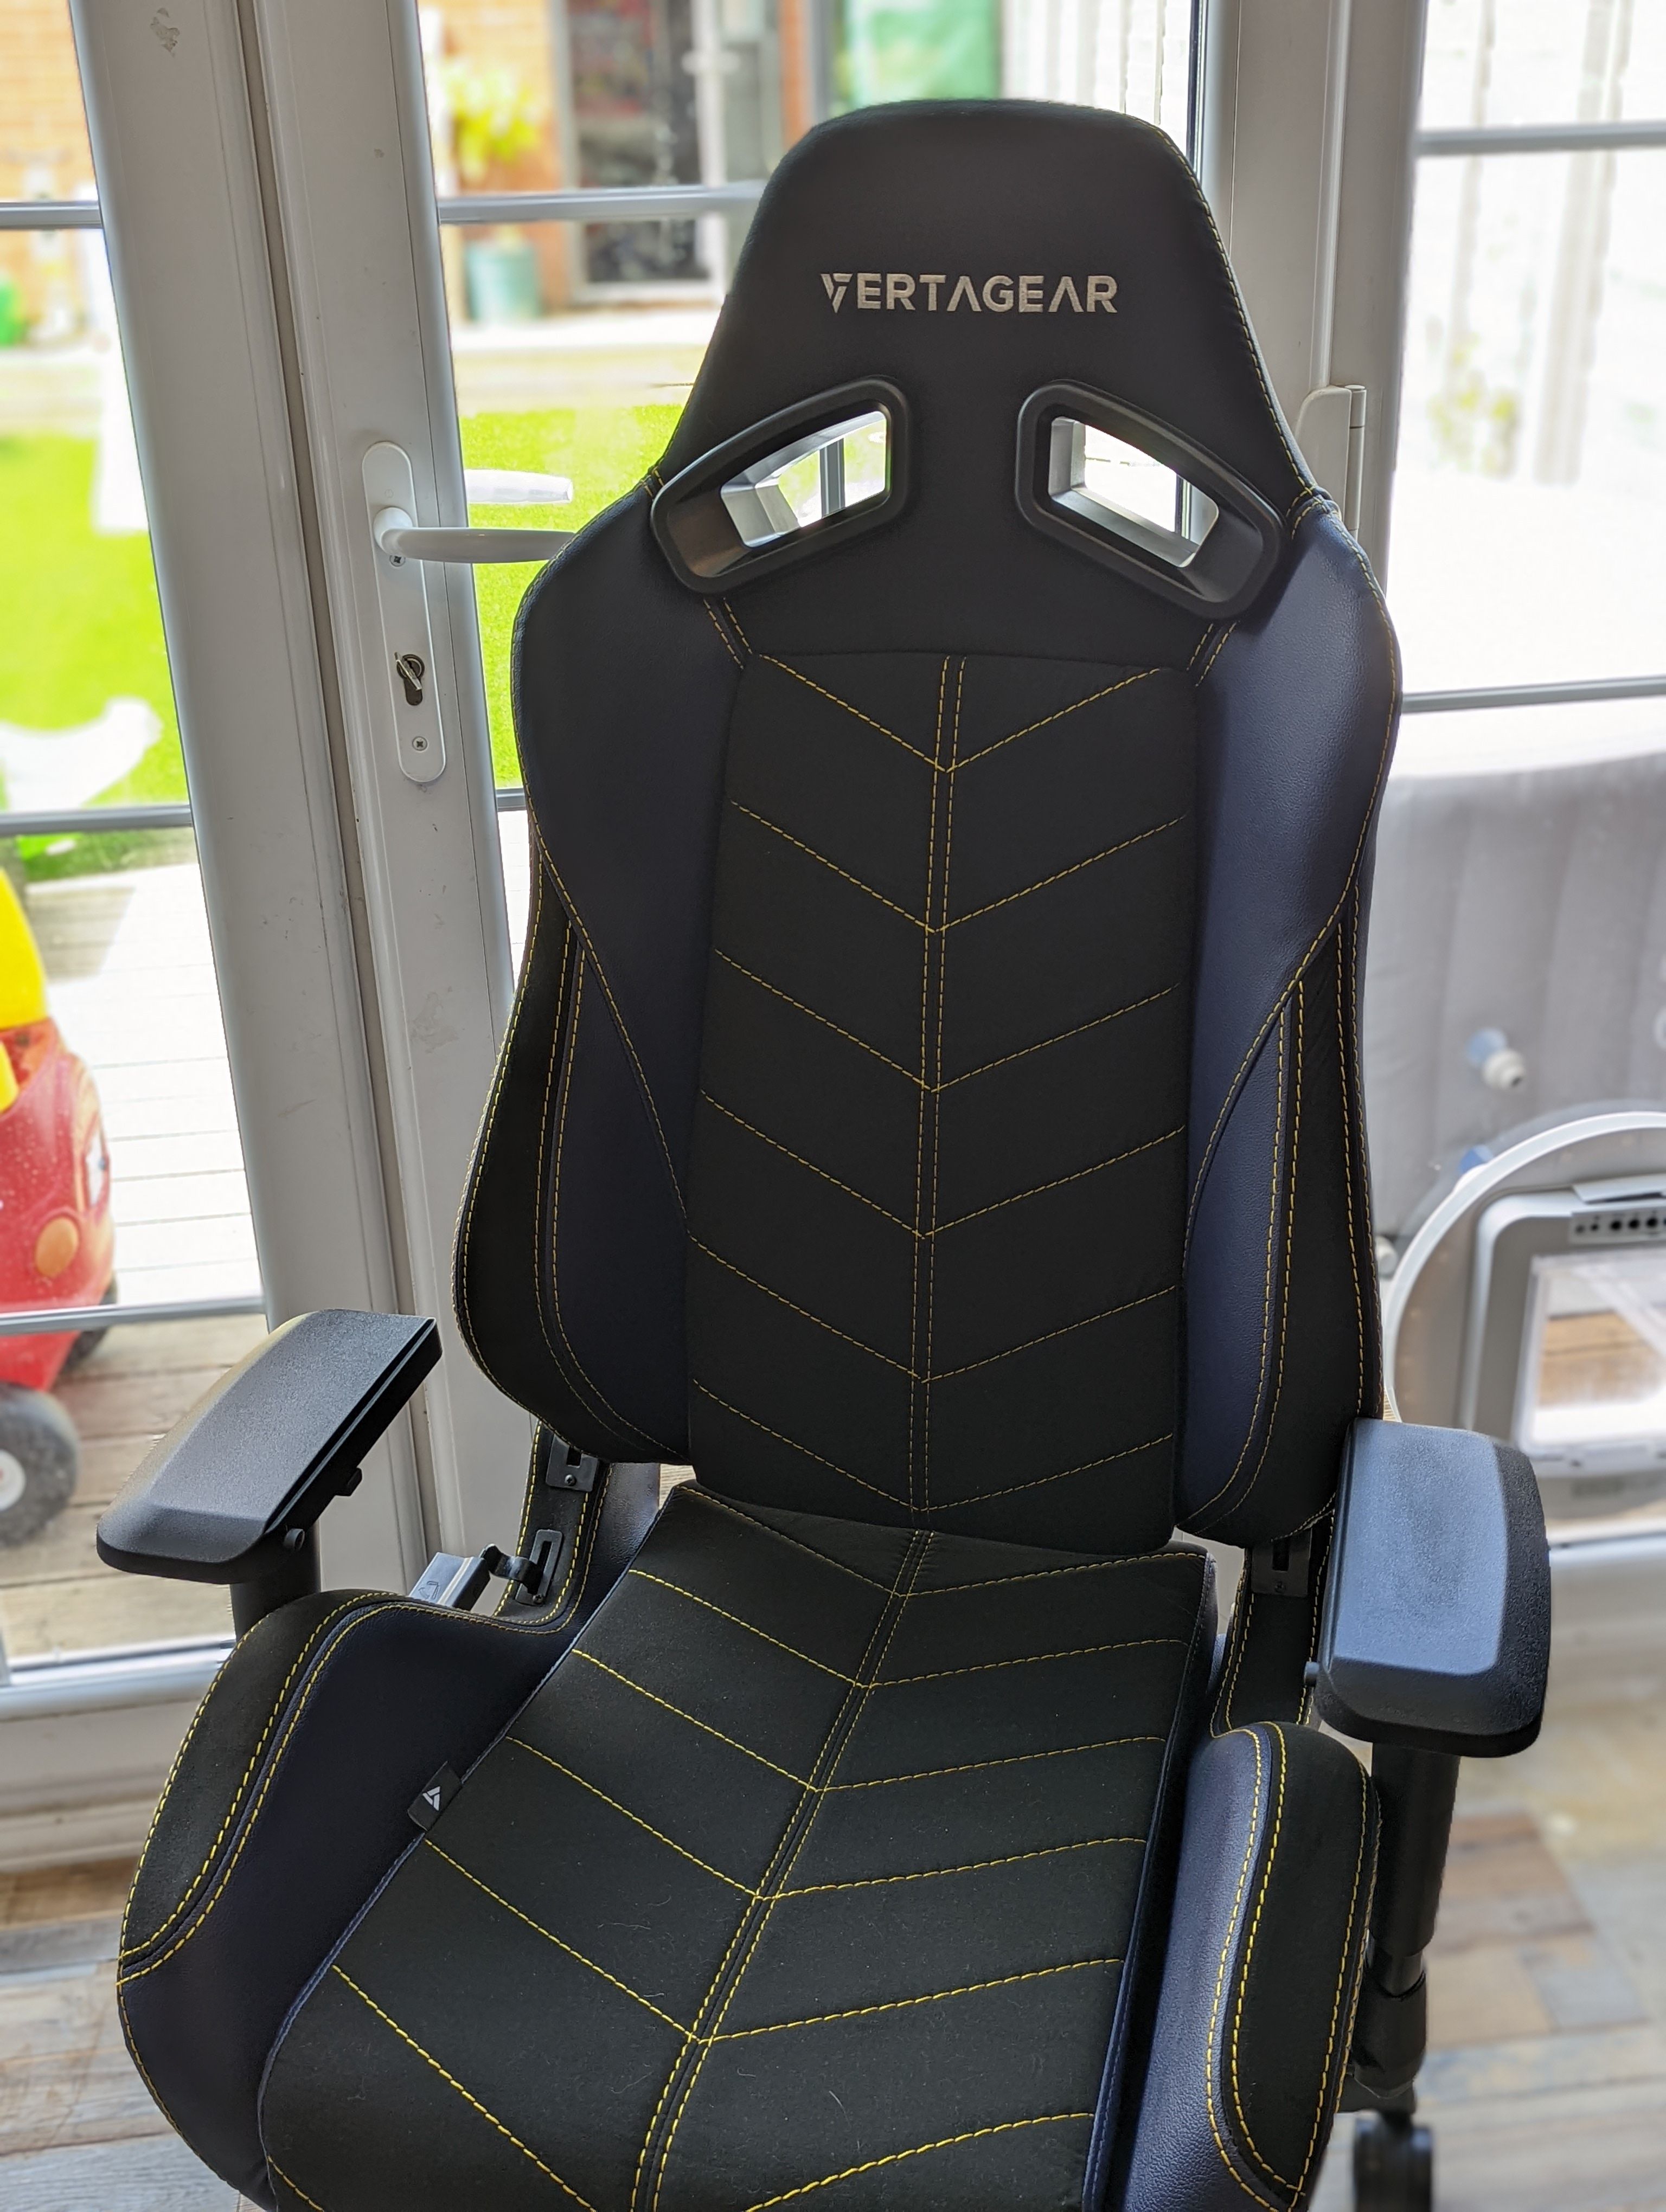 Vertagear SL5000 gaming chair